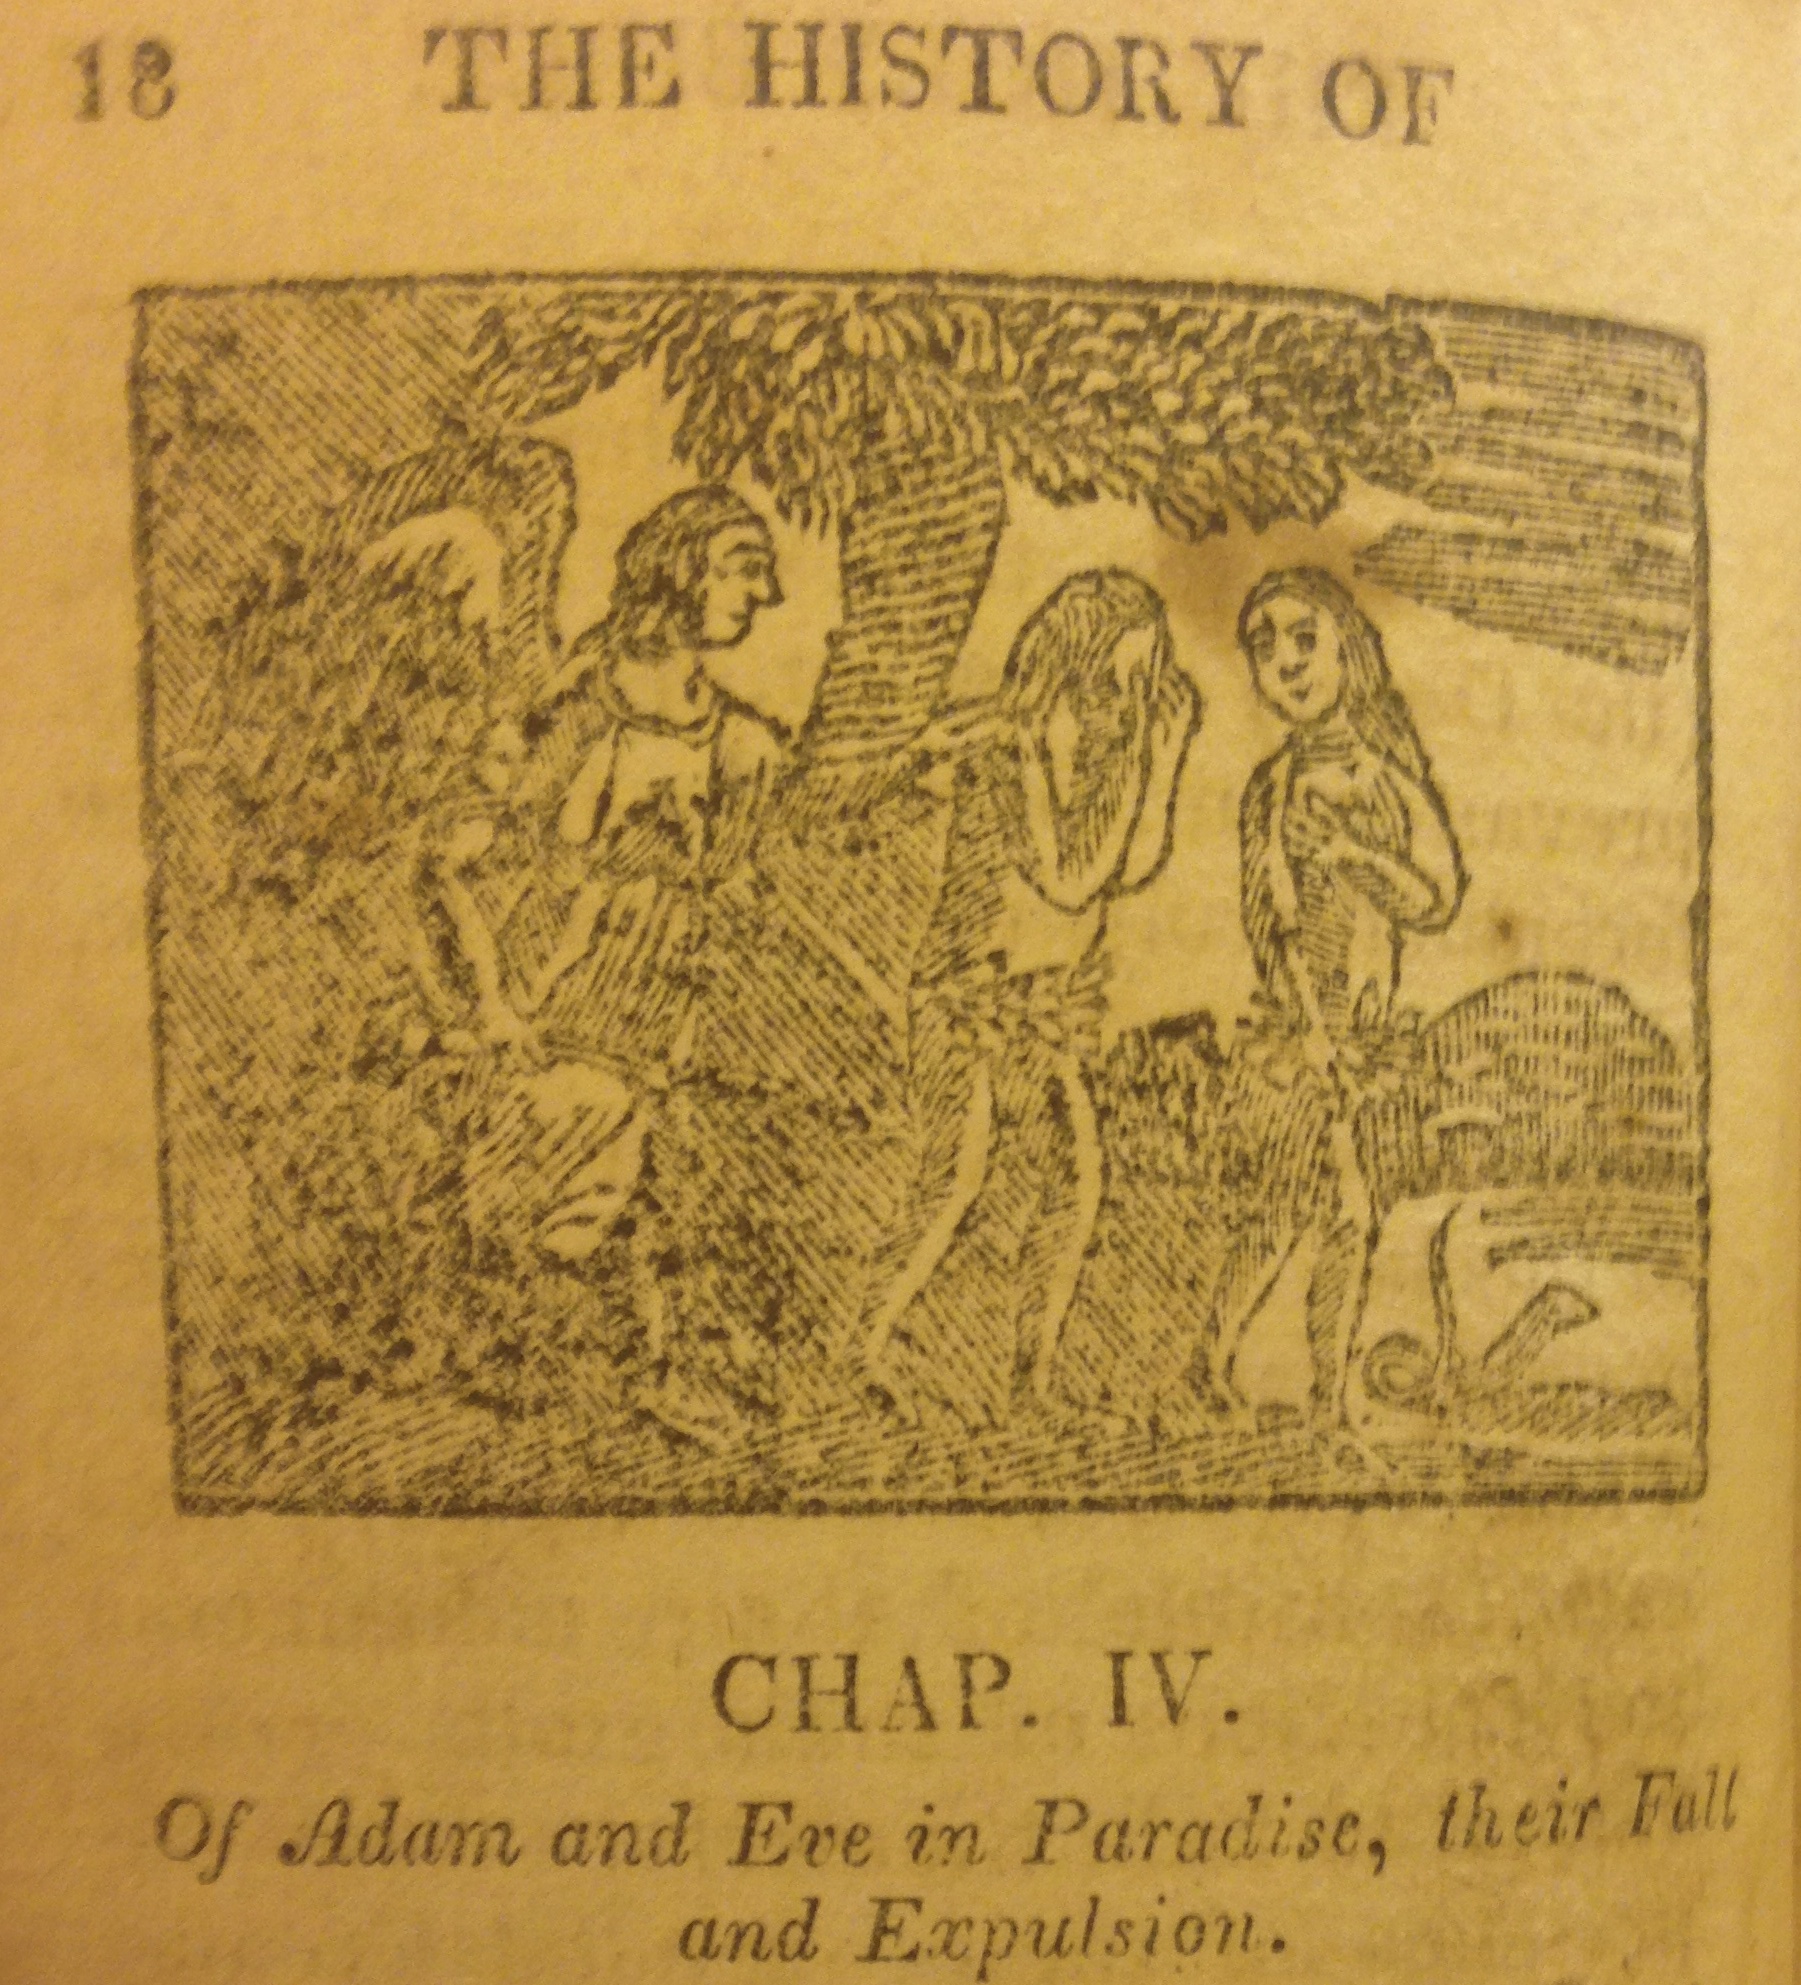 Thomas Carey's Simian Adam and Eve